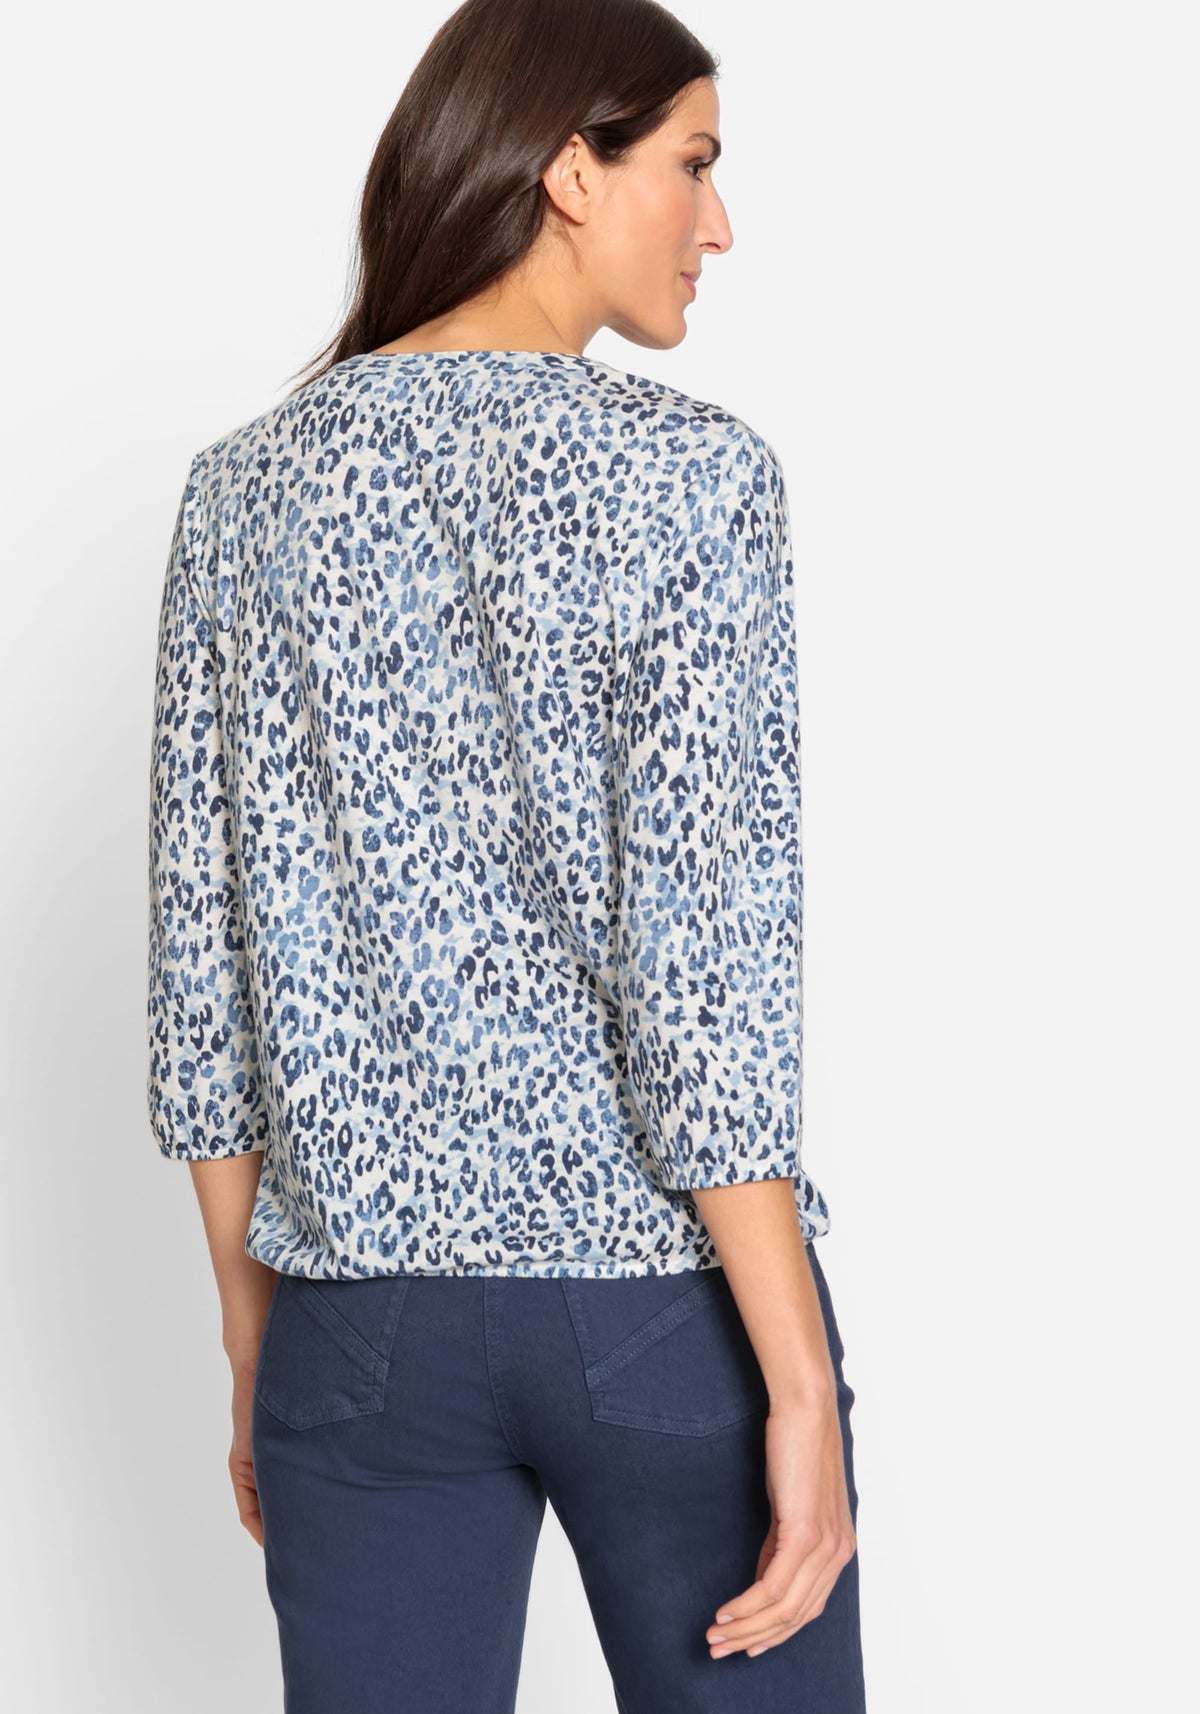 Cotton Blend 3/4 Sleeve Leopard Print Tunic T-Shirt containing TENCEL™ Modal